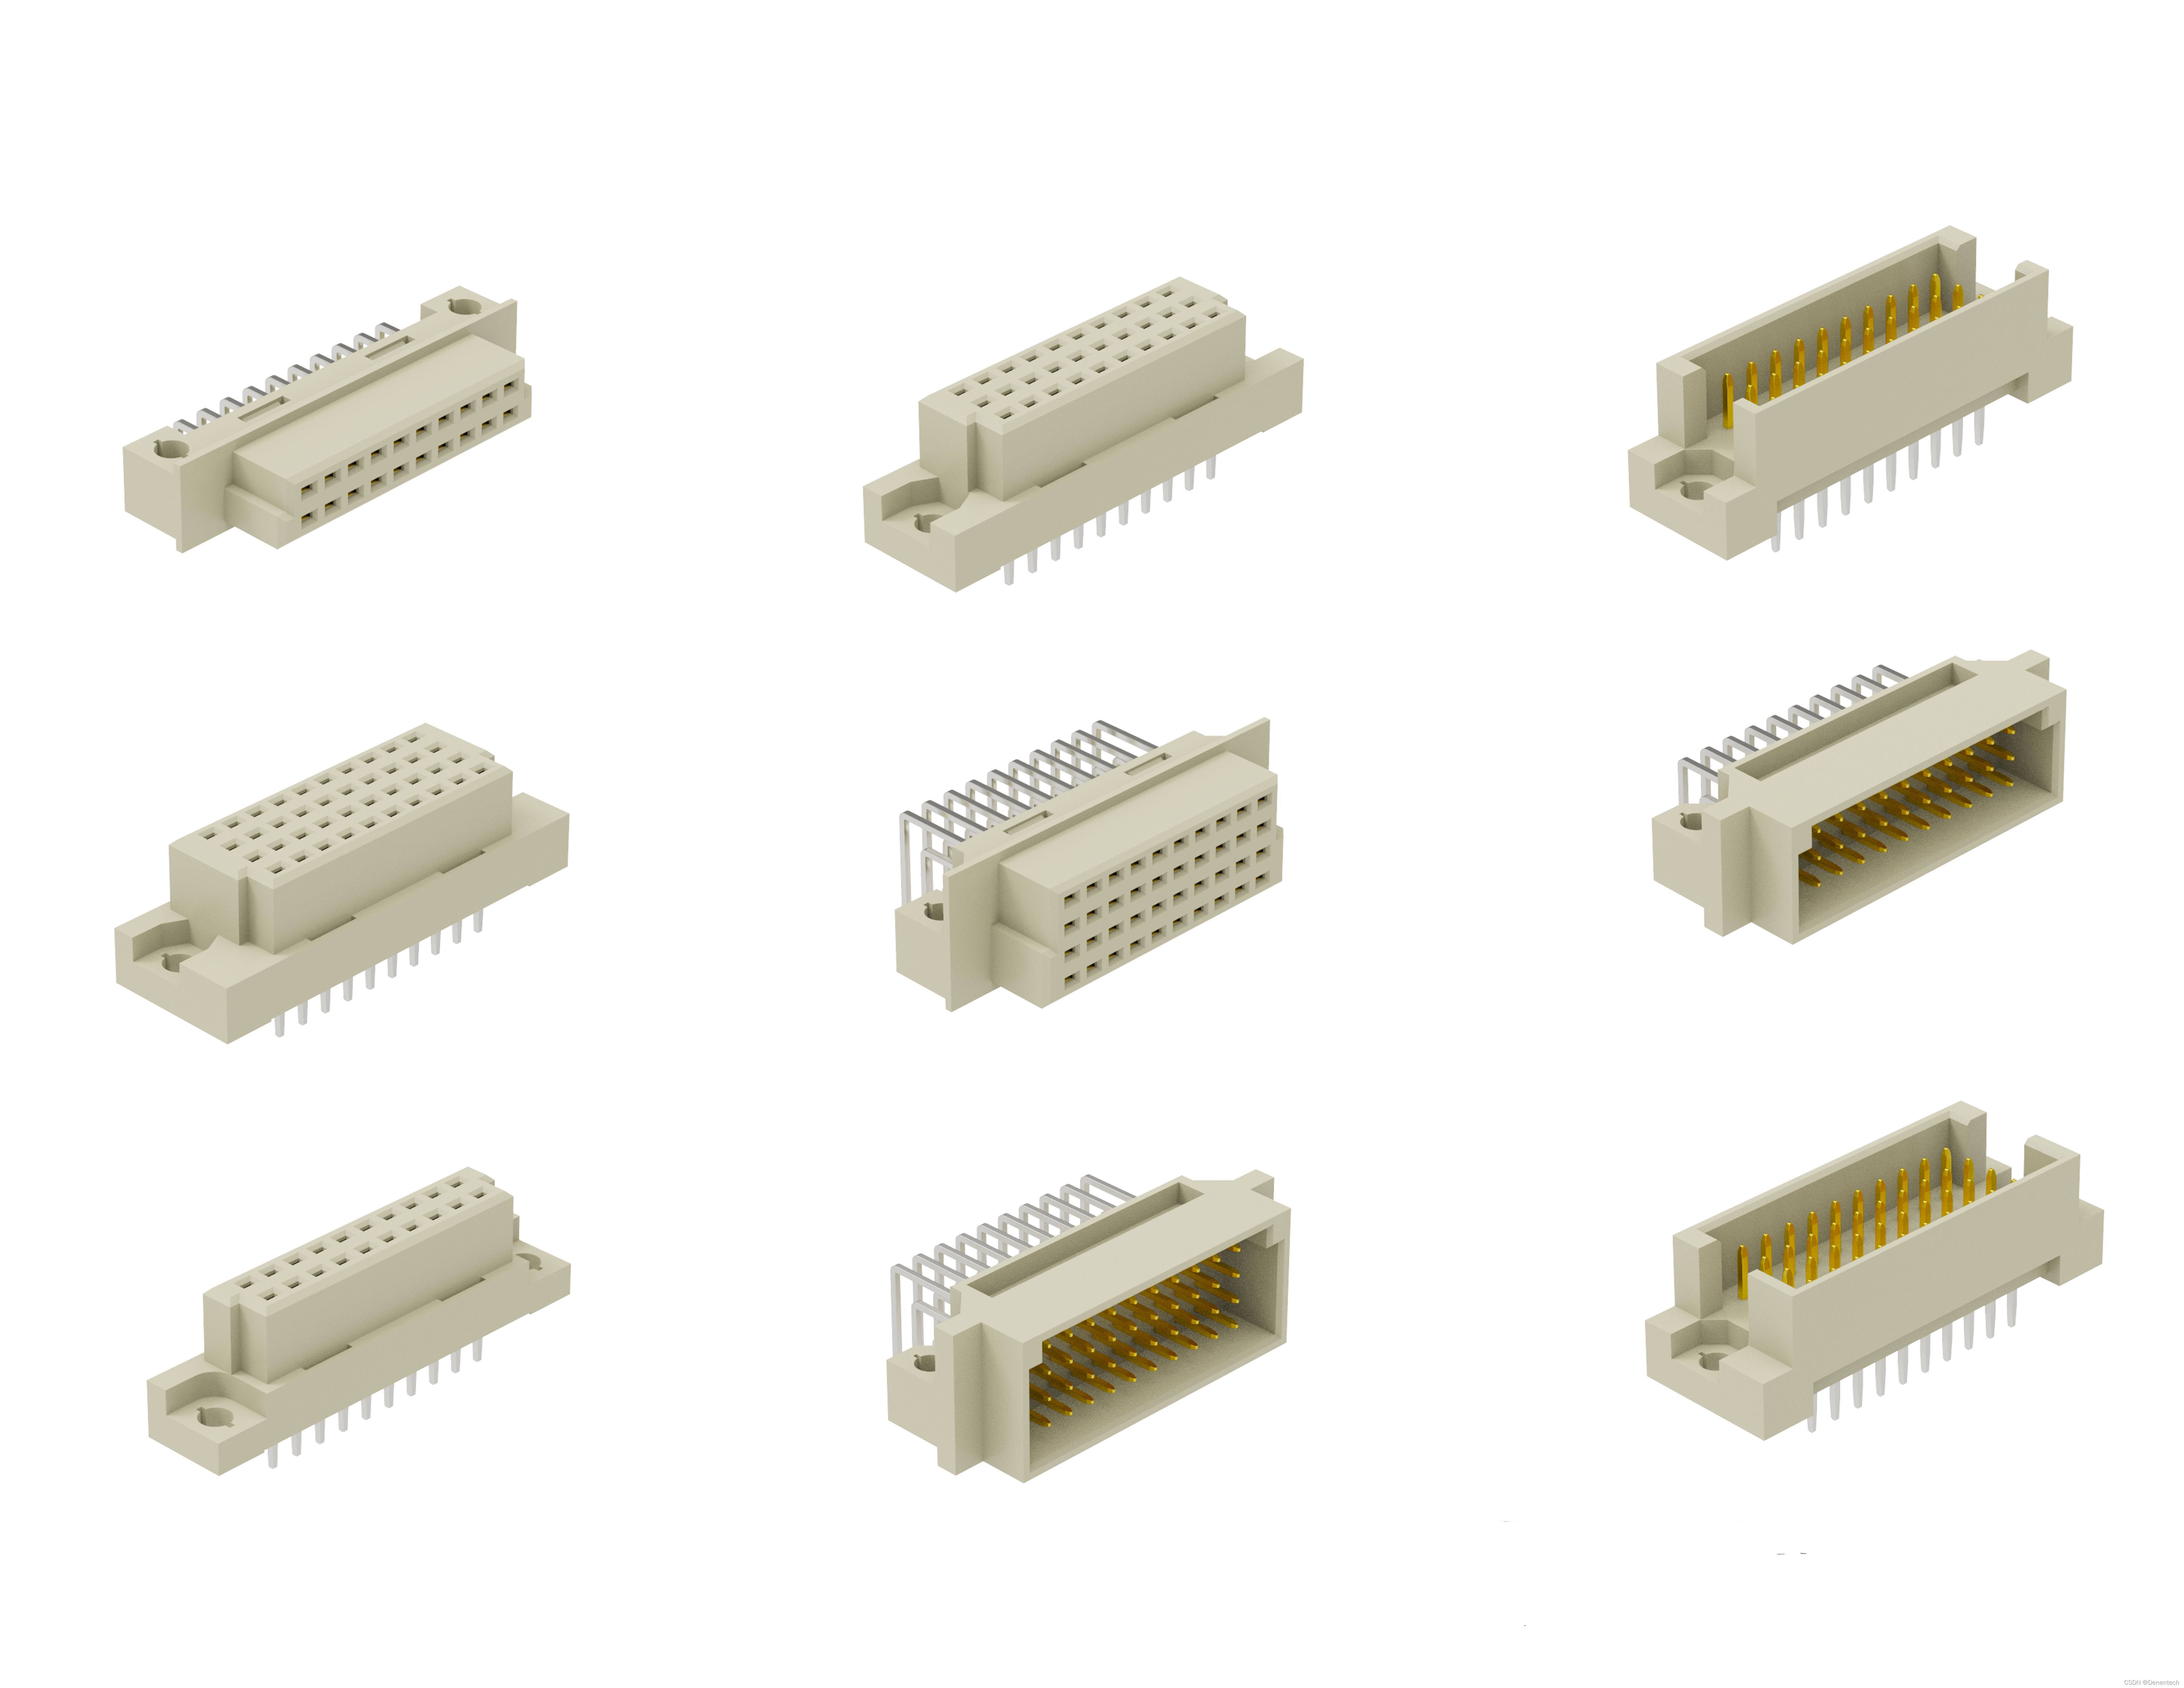 4 Rows 128 Pin Plug Type C DIN 41612 / IEC 60603-2 Connectors